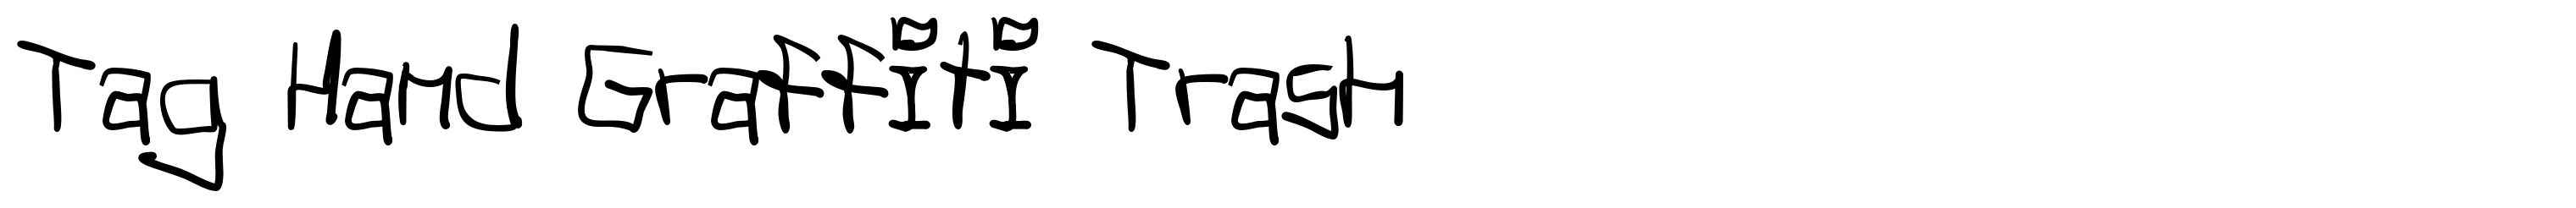 Tag Hand Graffiti Trash